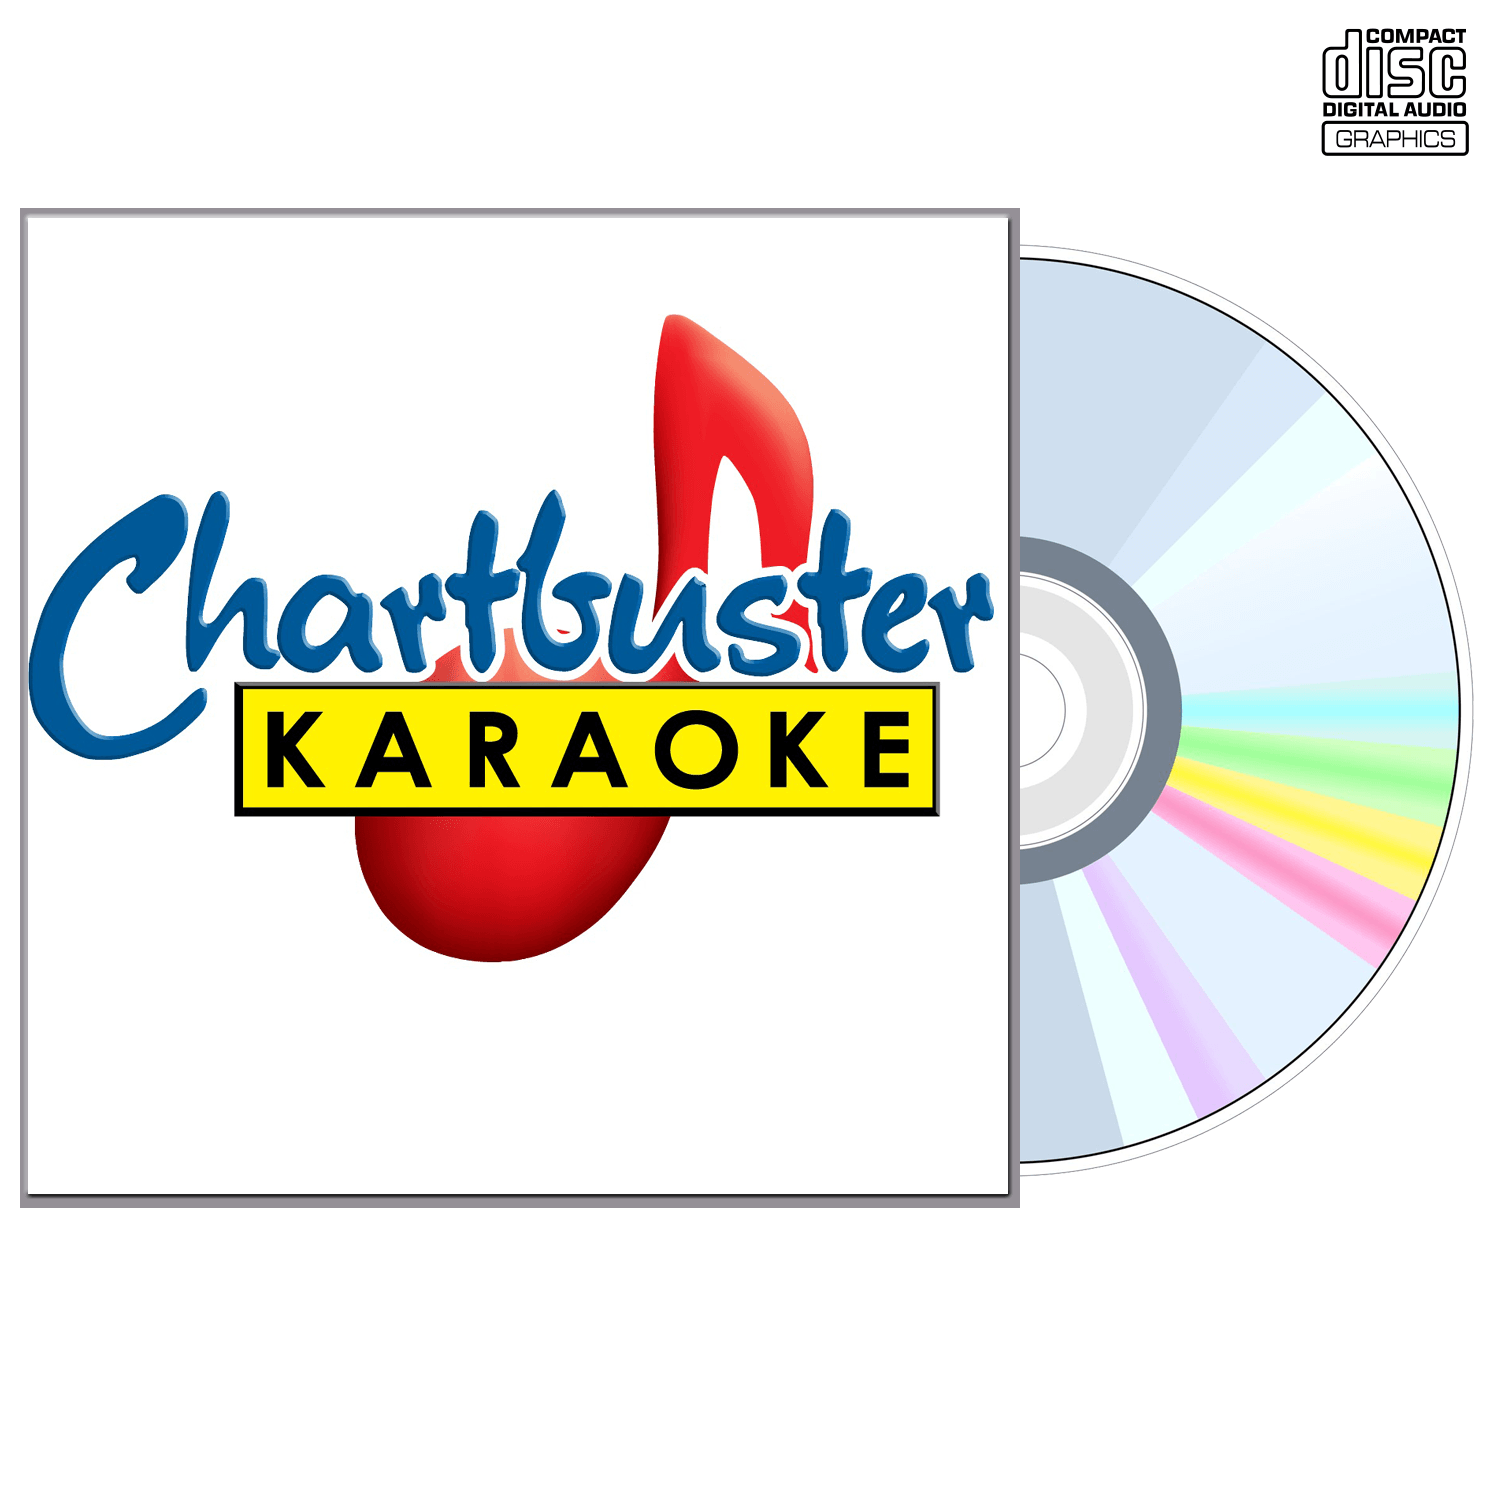 The Judds Vol 2 - CD+G - Chartbuster Karaoke - Karaoke Home Entertainment